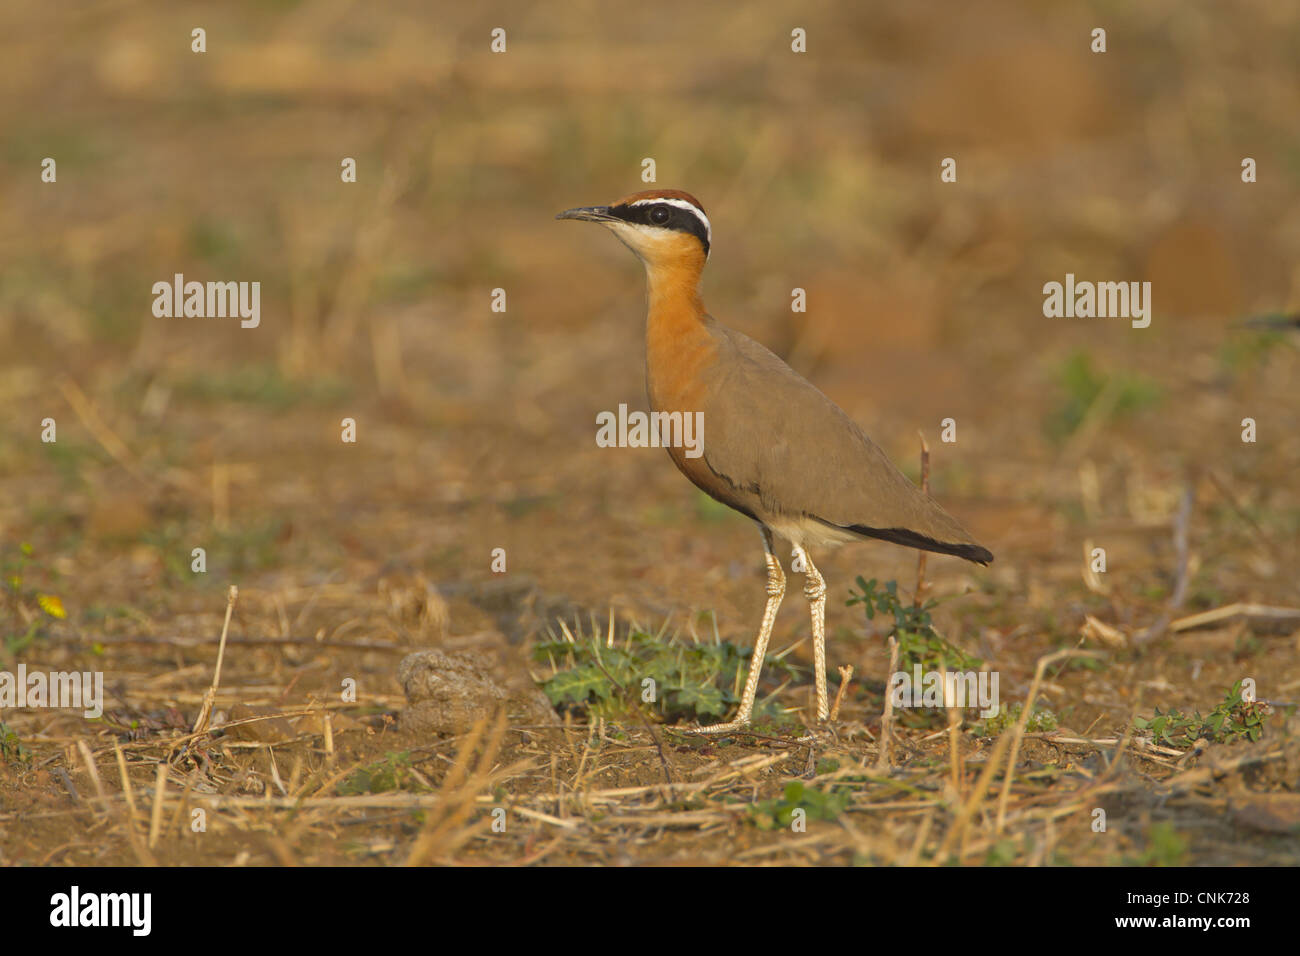 Indian Courser (Cursorius coromandelicus) adult, standing in field, India, february Stock Photo